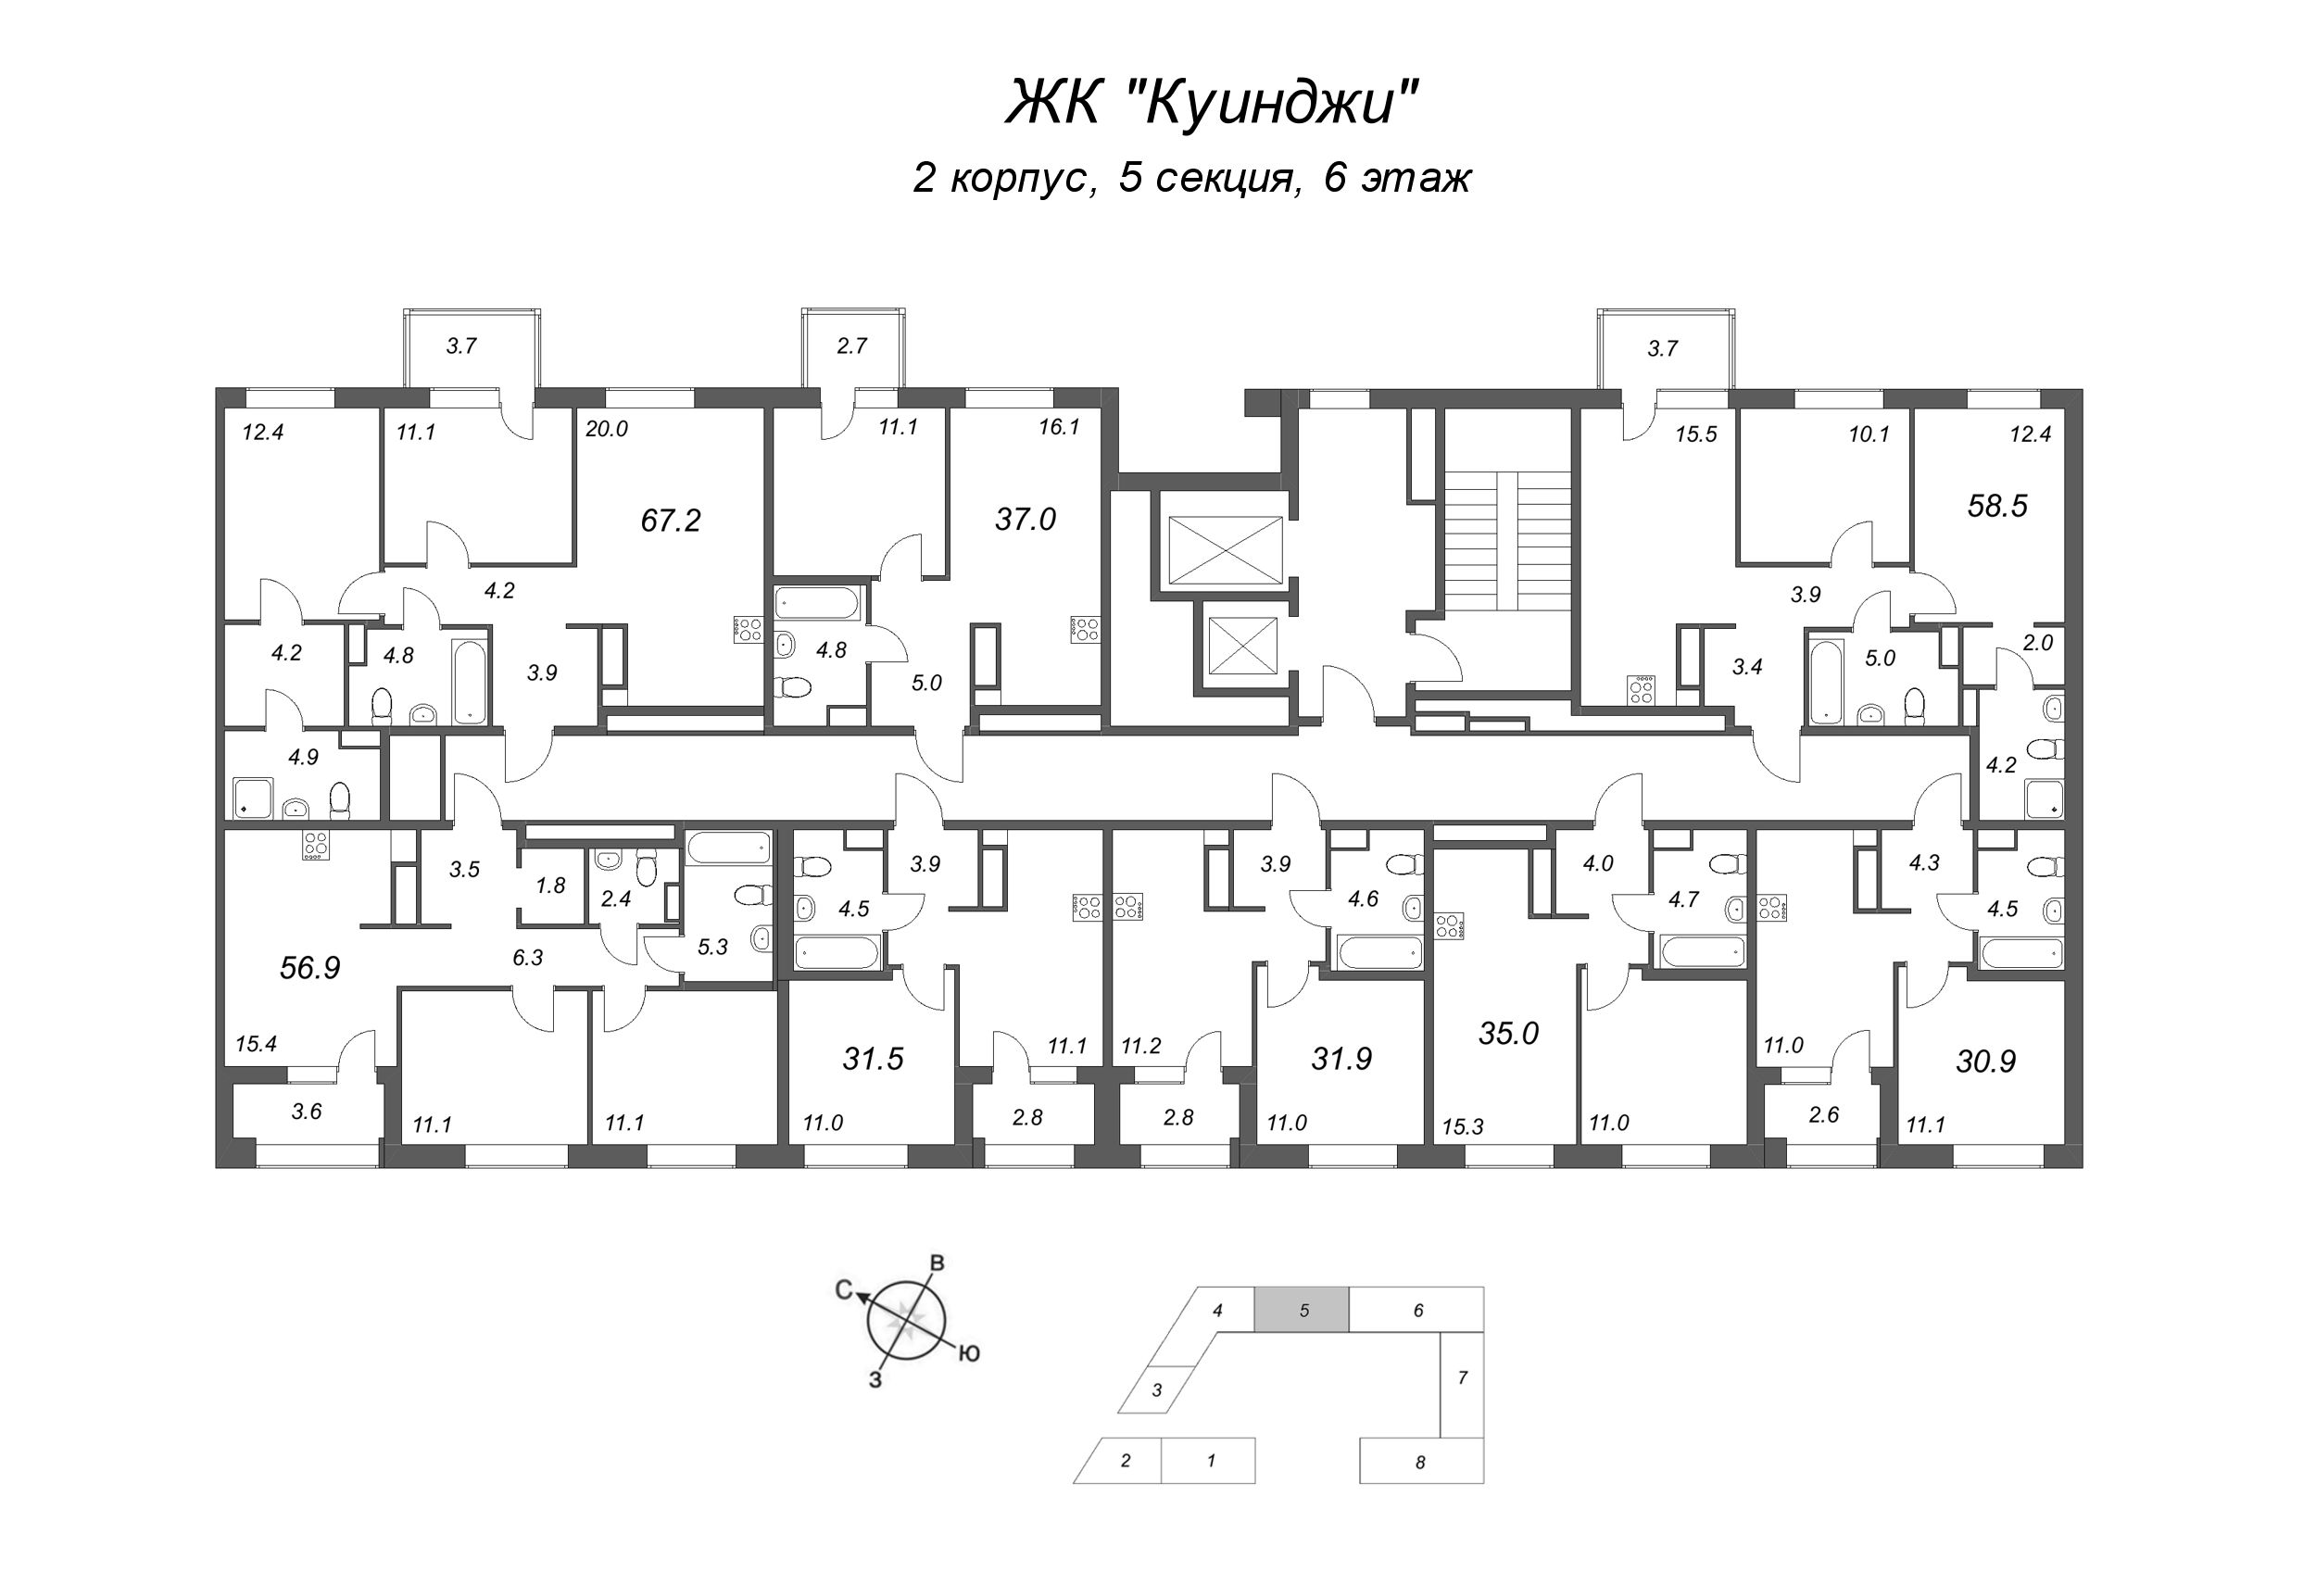 3-комнатная (Евро) квартира, 58.5 м² в ЖК "Куинджи" - планировка этажа